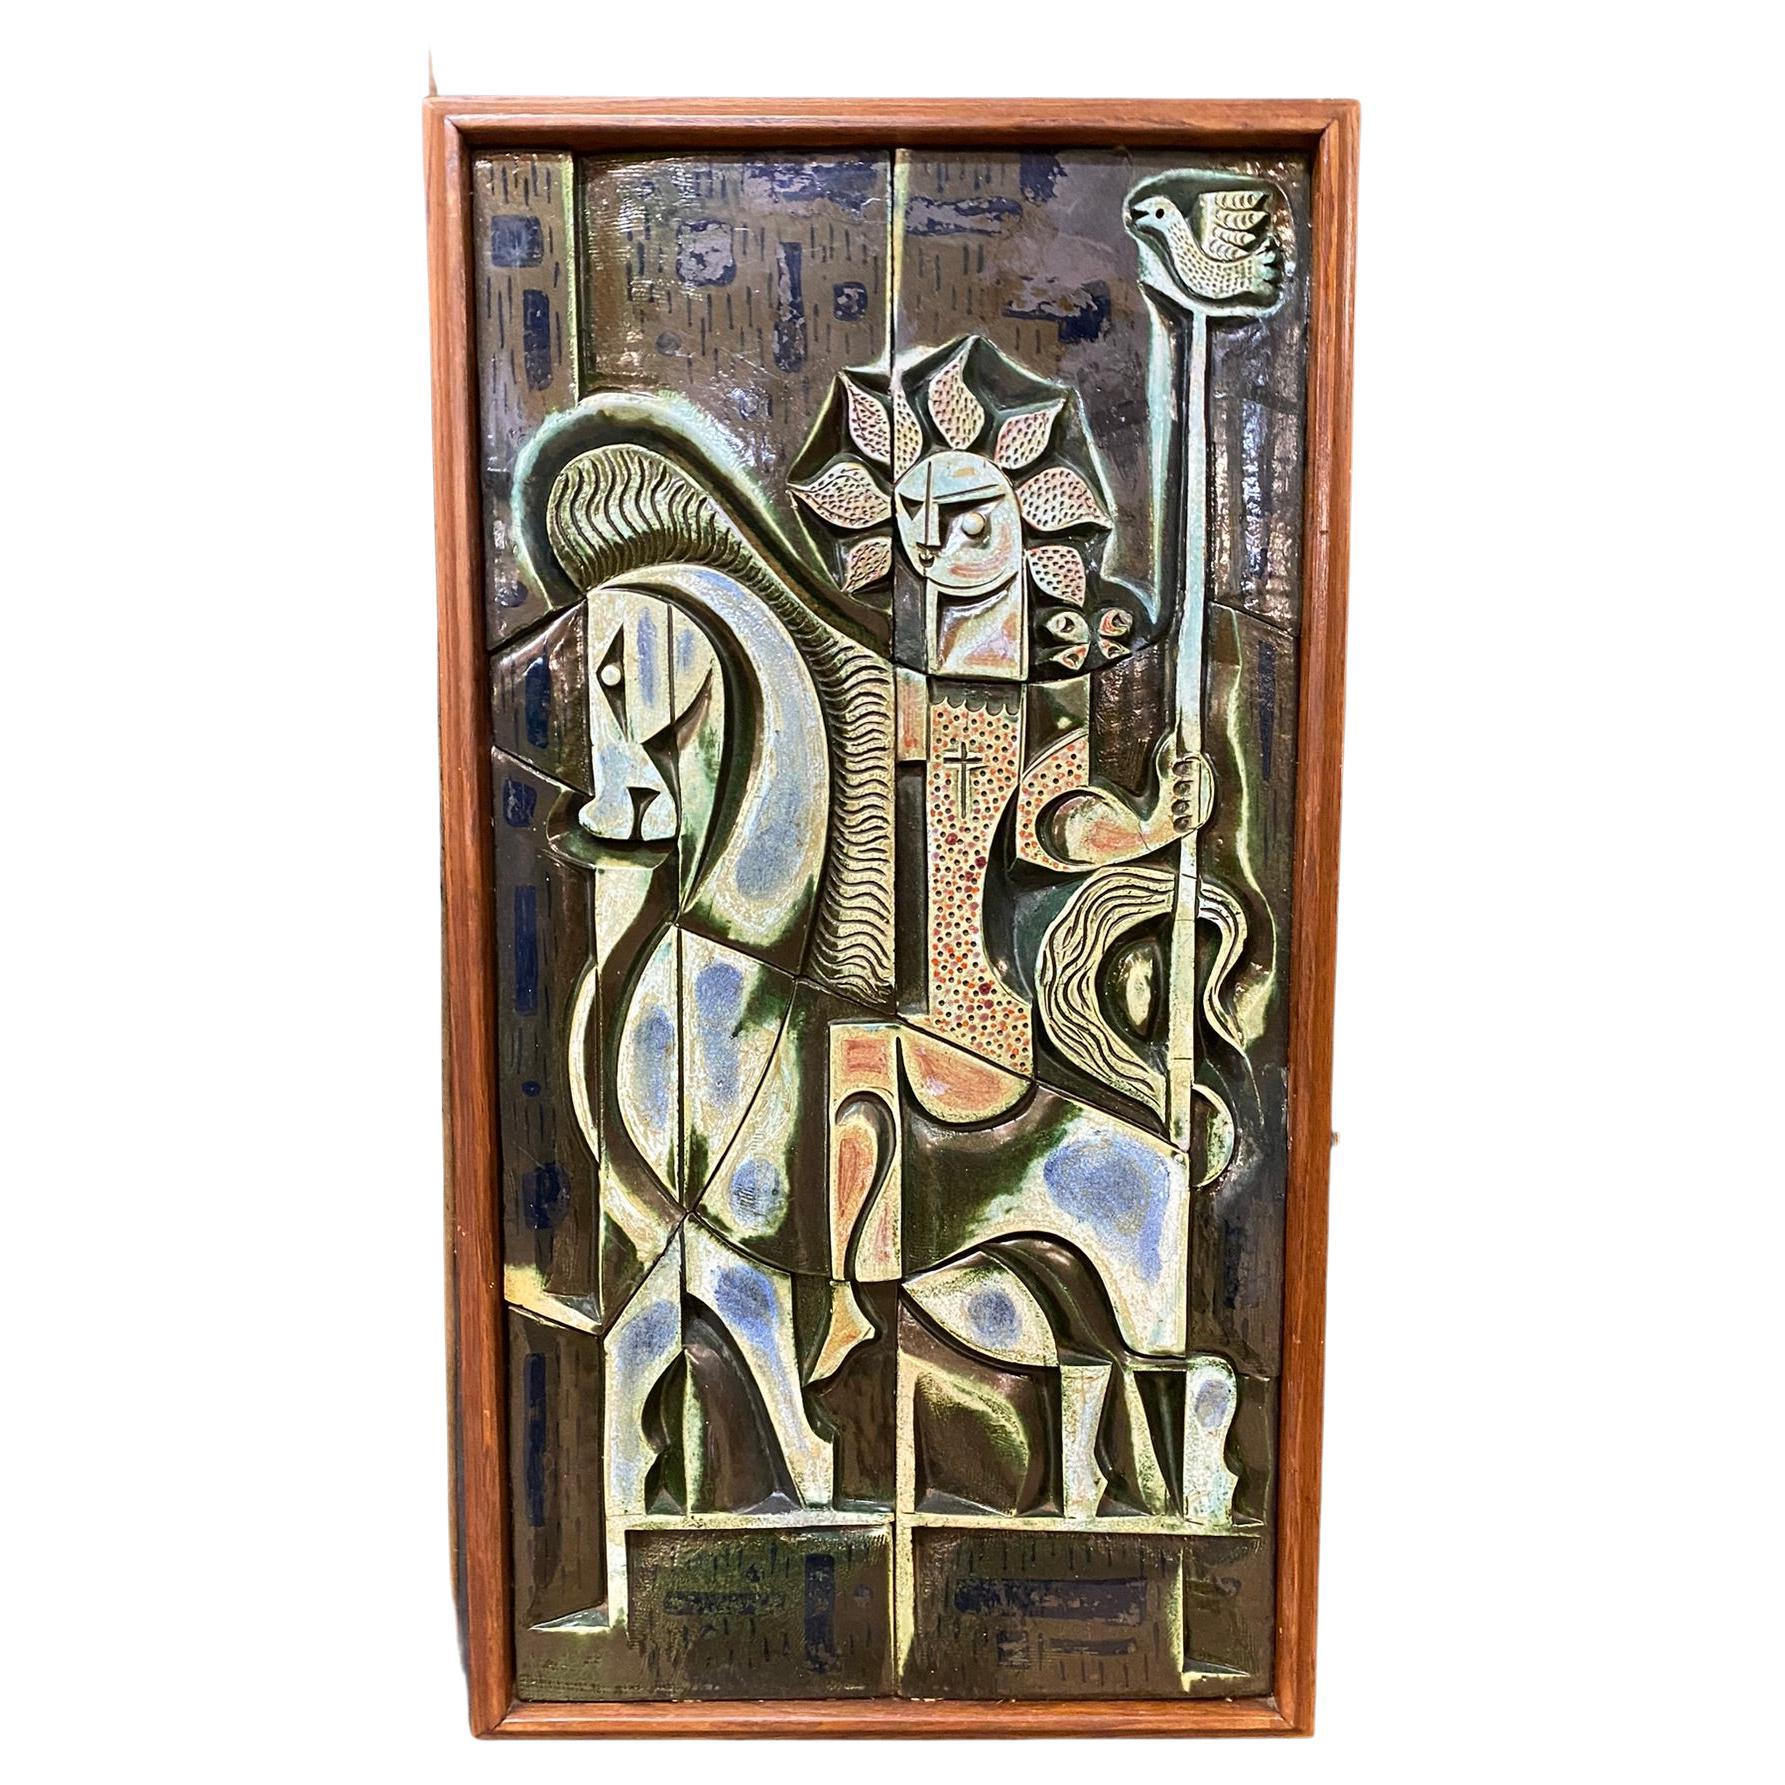 Boleslaw Danikowski Large Ceramic Panel in a Wooden Frame, circa 1950